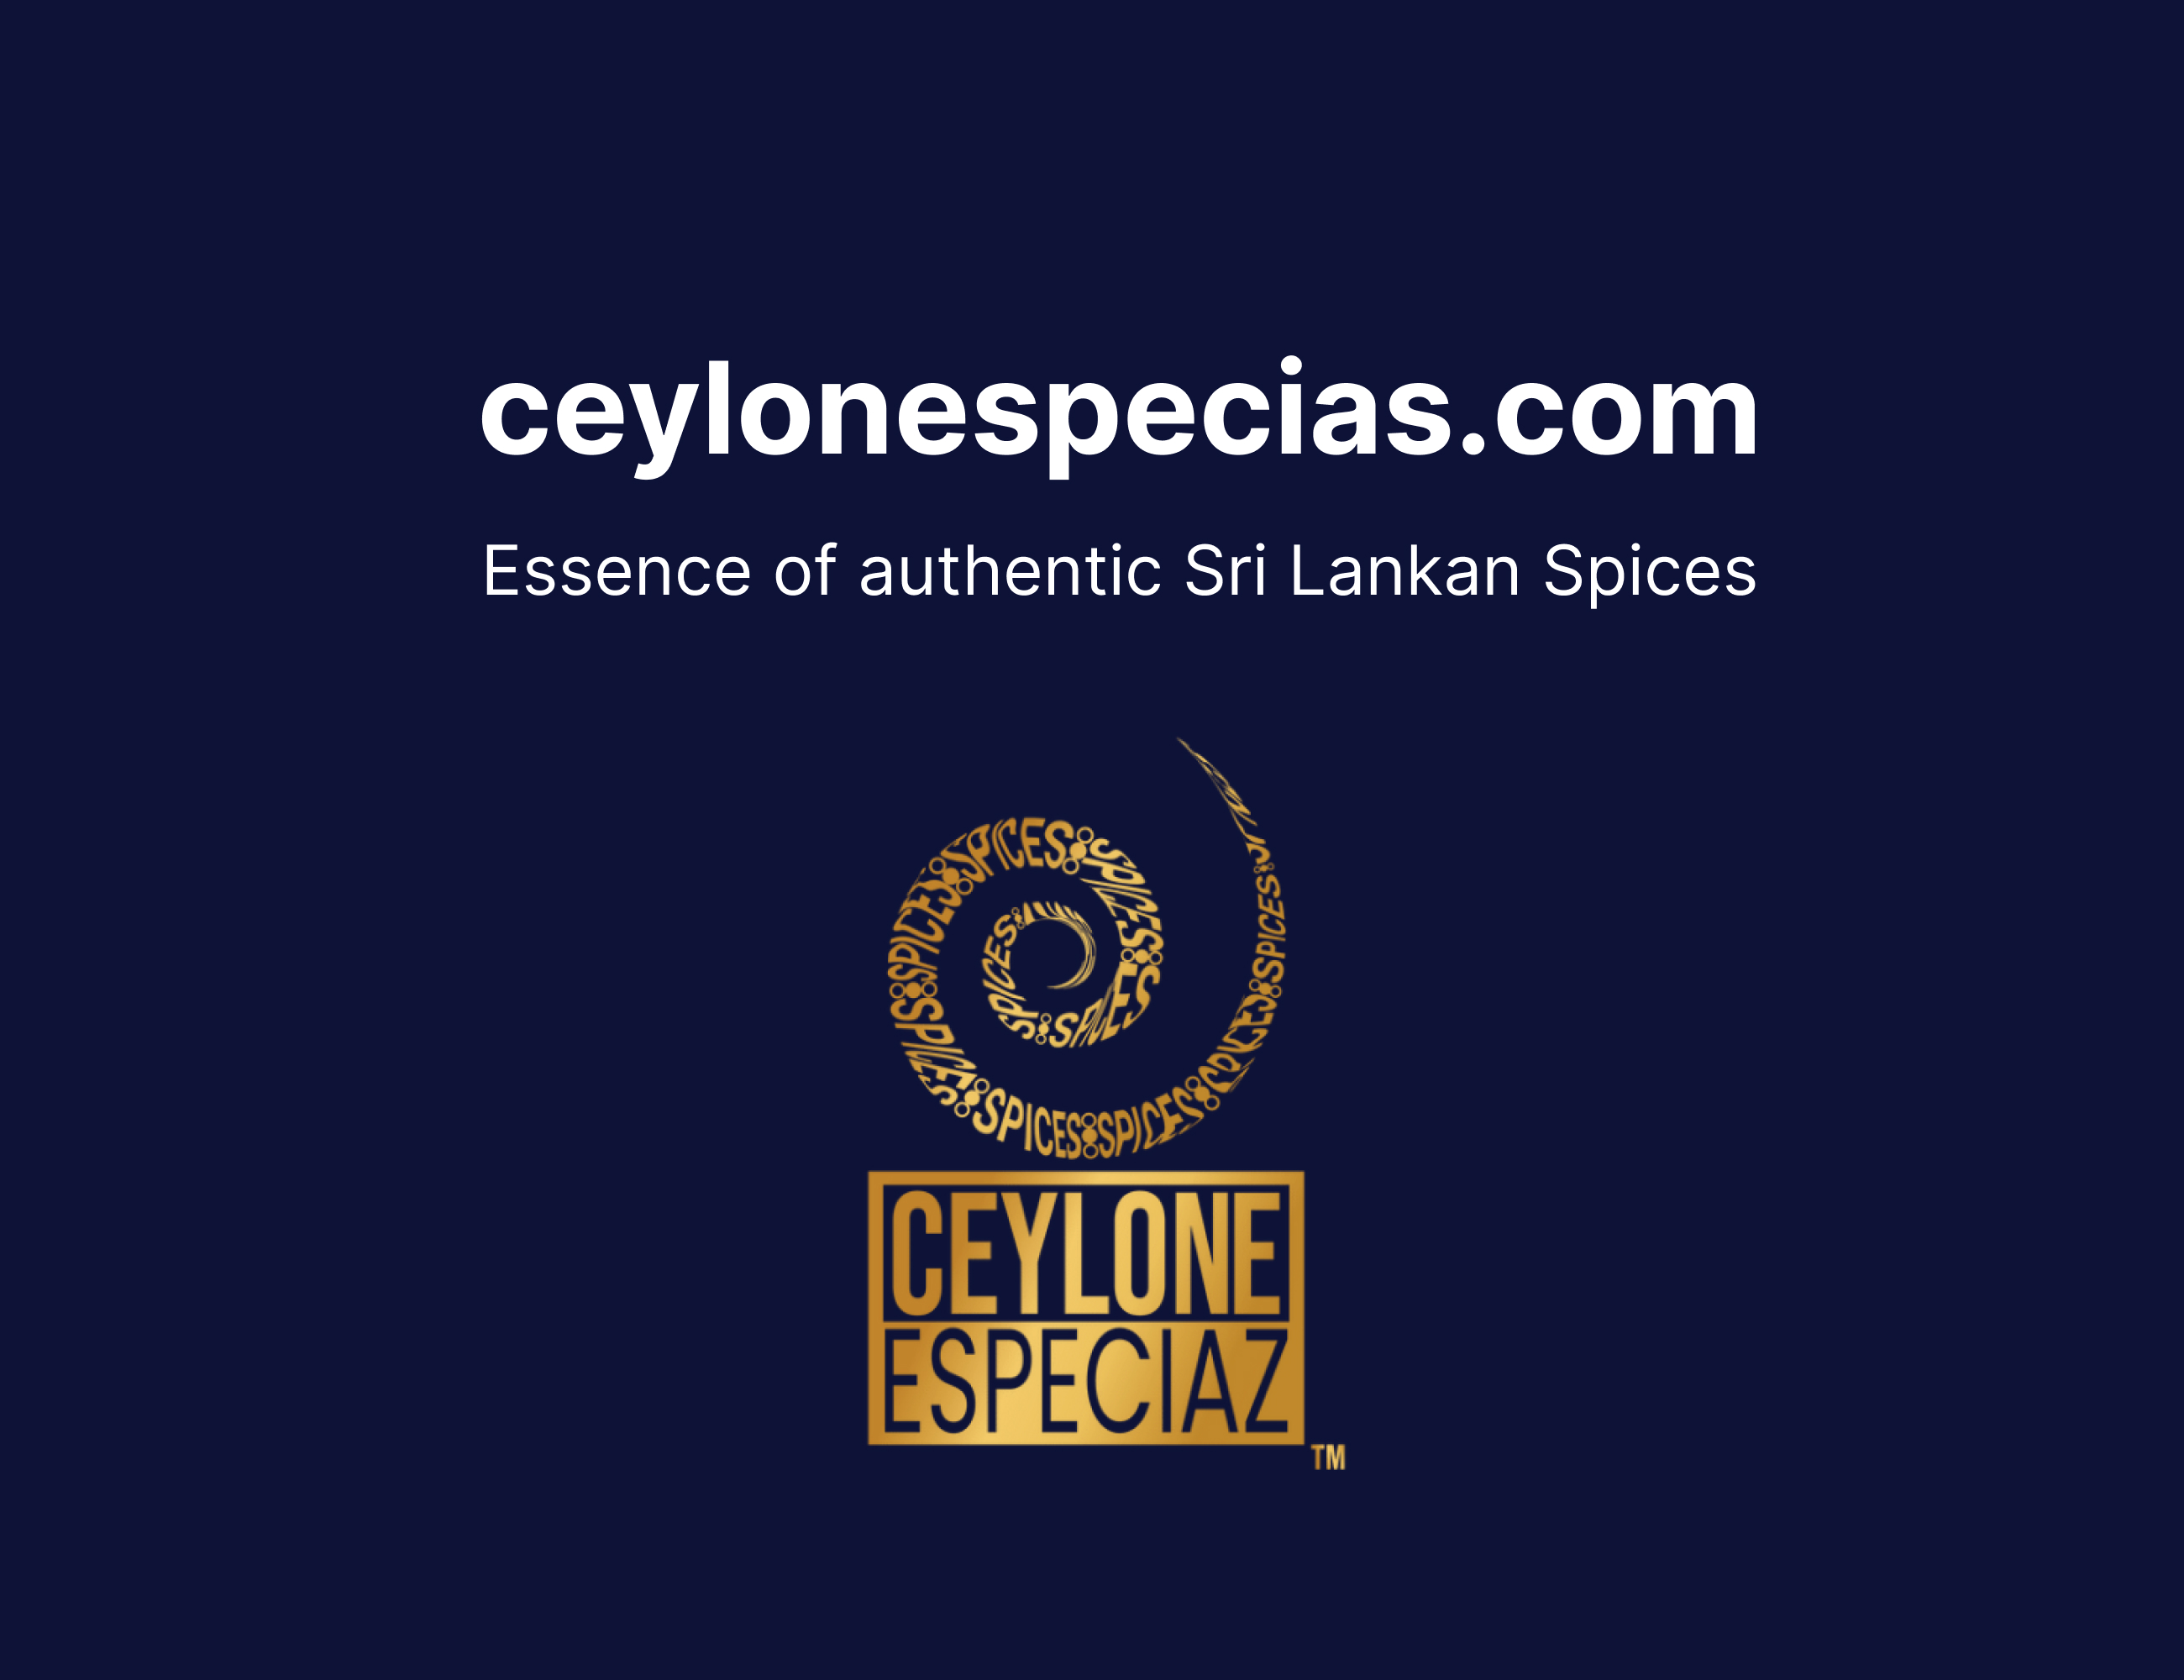 ceylonespecias.com online store